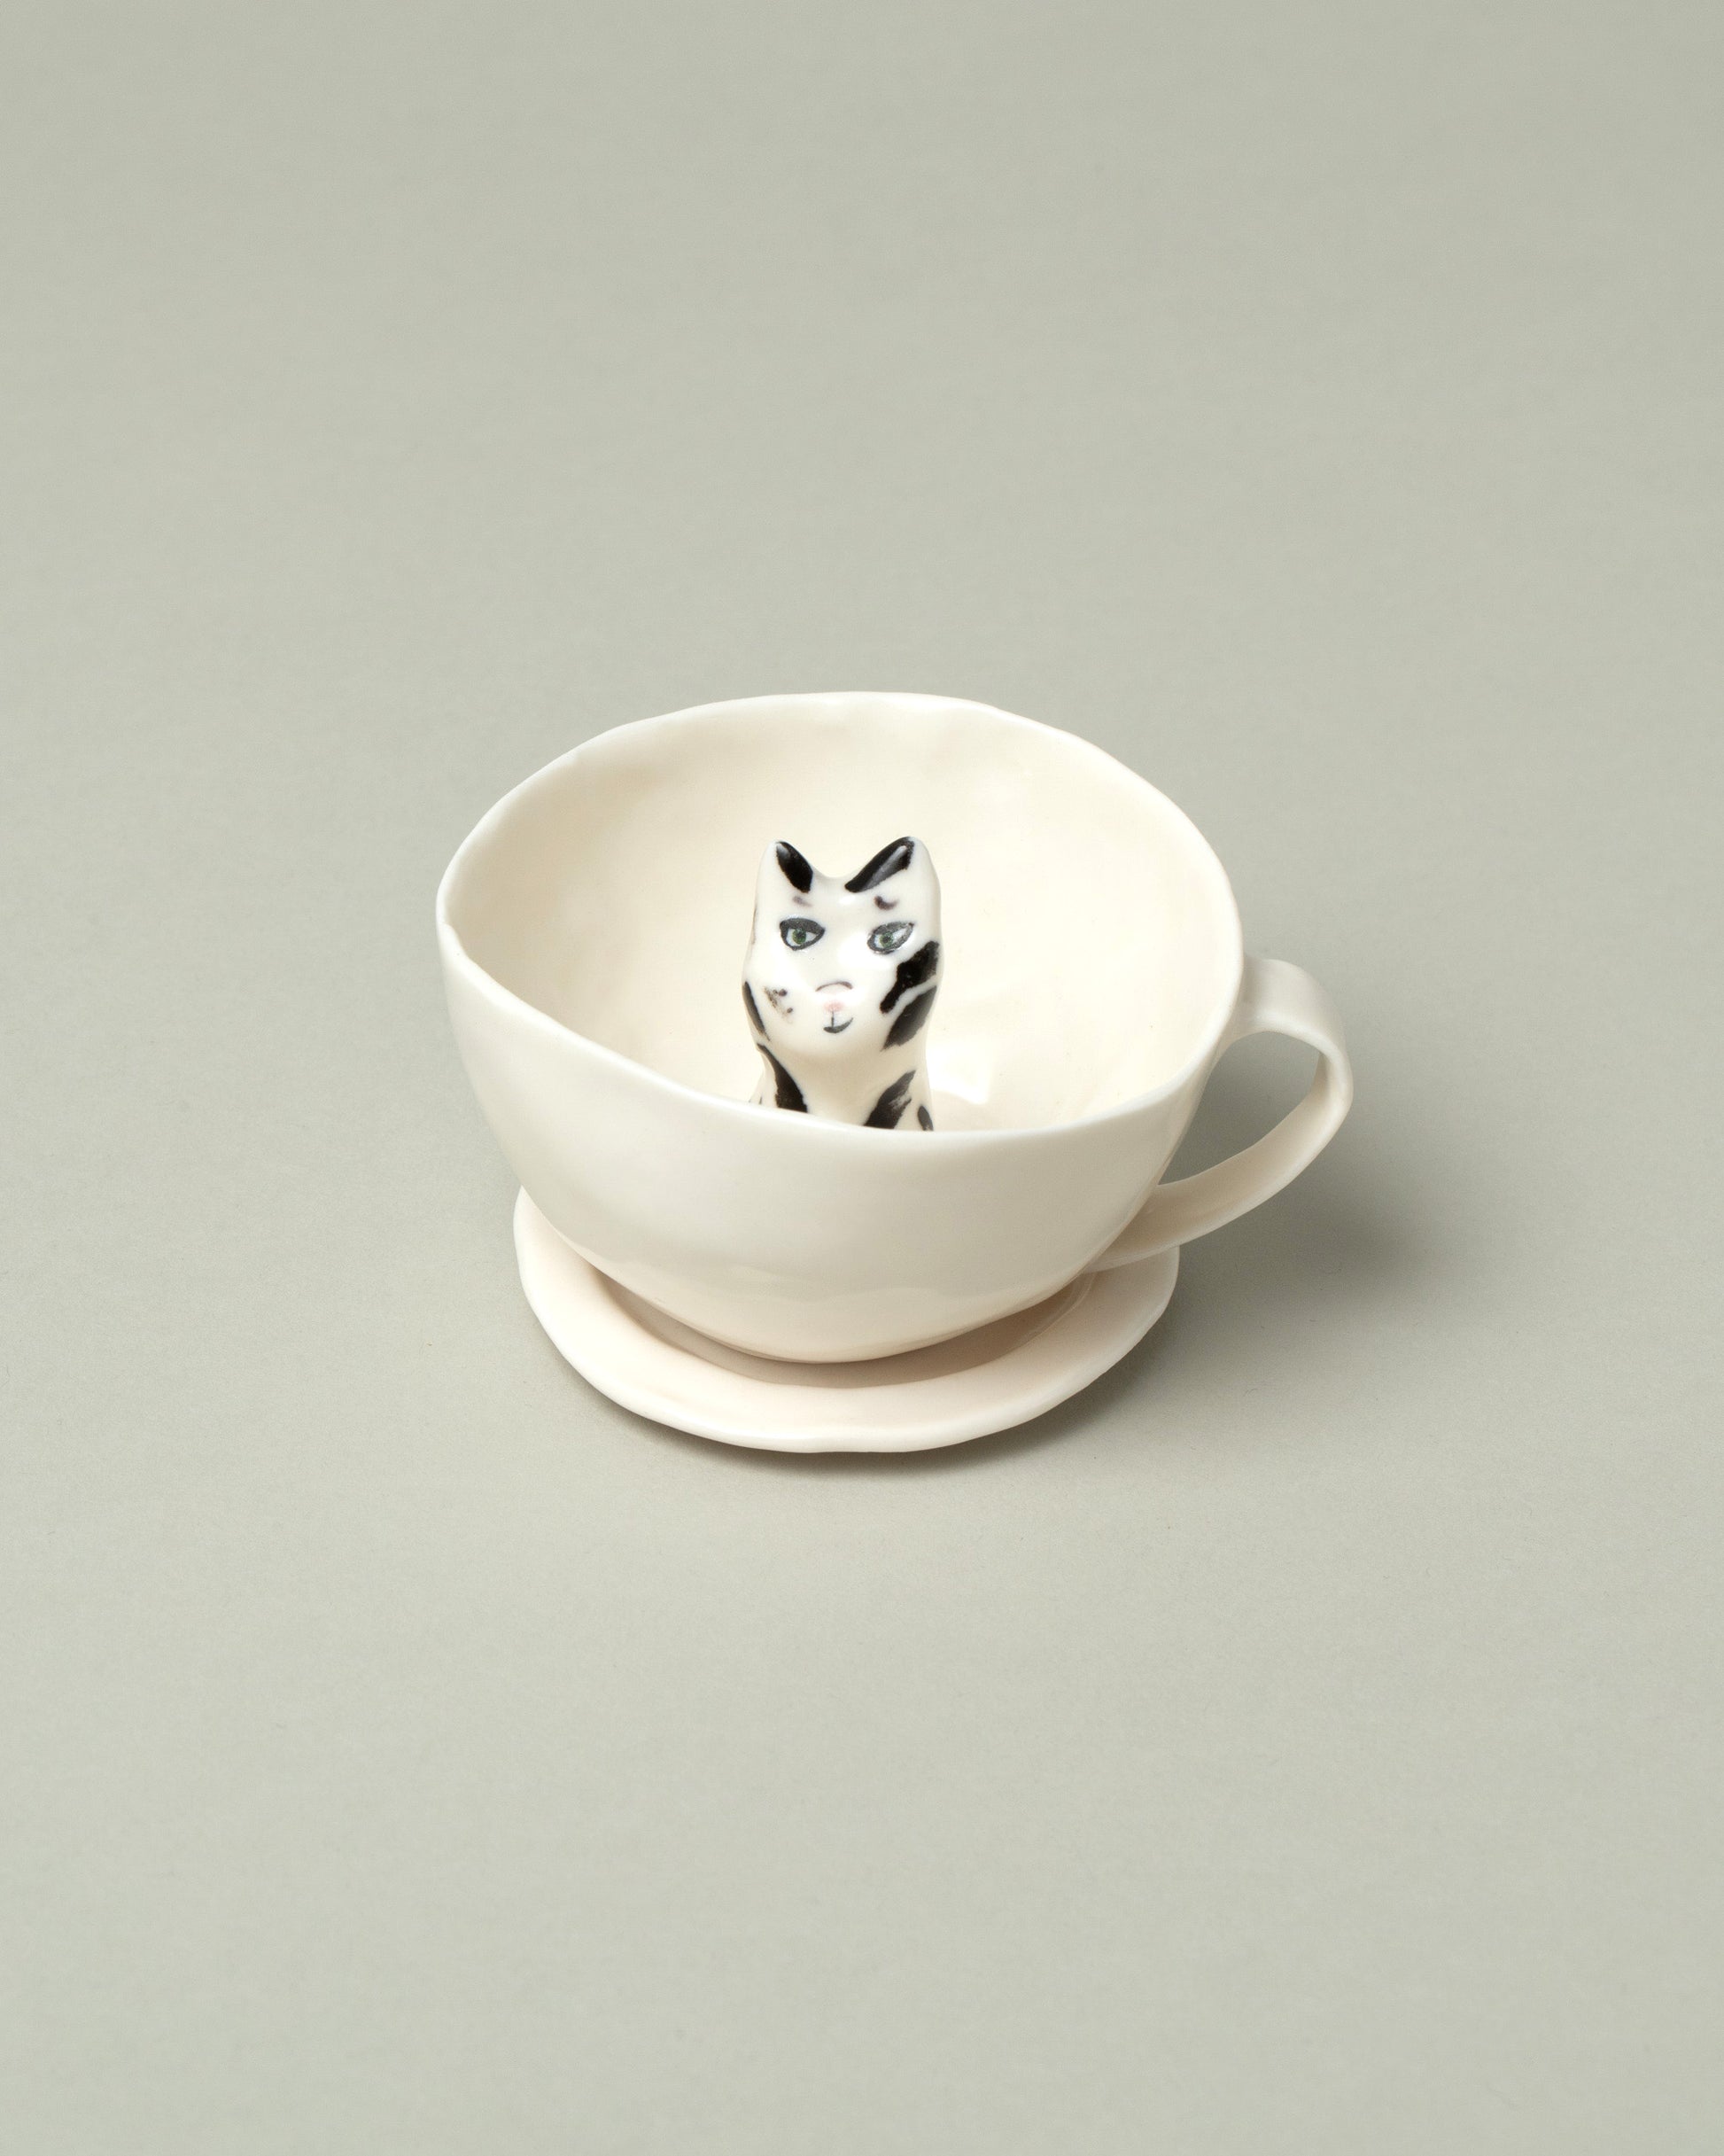 Closeup detail of the Eleonor Boström Black Spots Cat Tea Cup with Saucer on light color background.